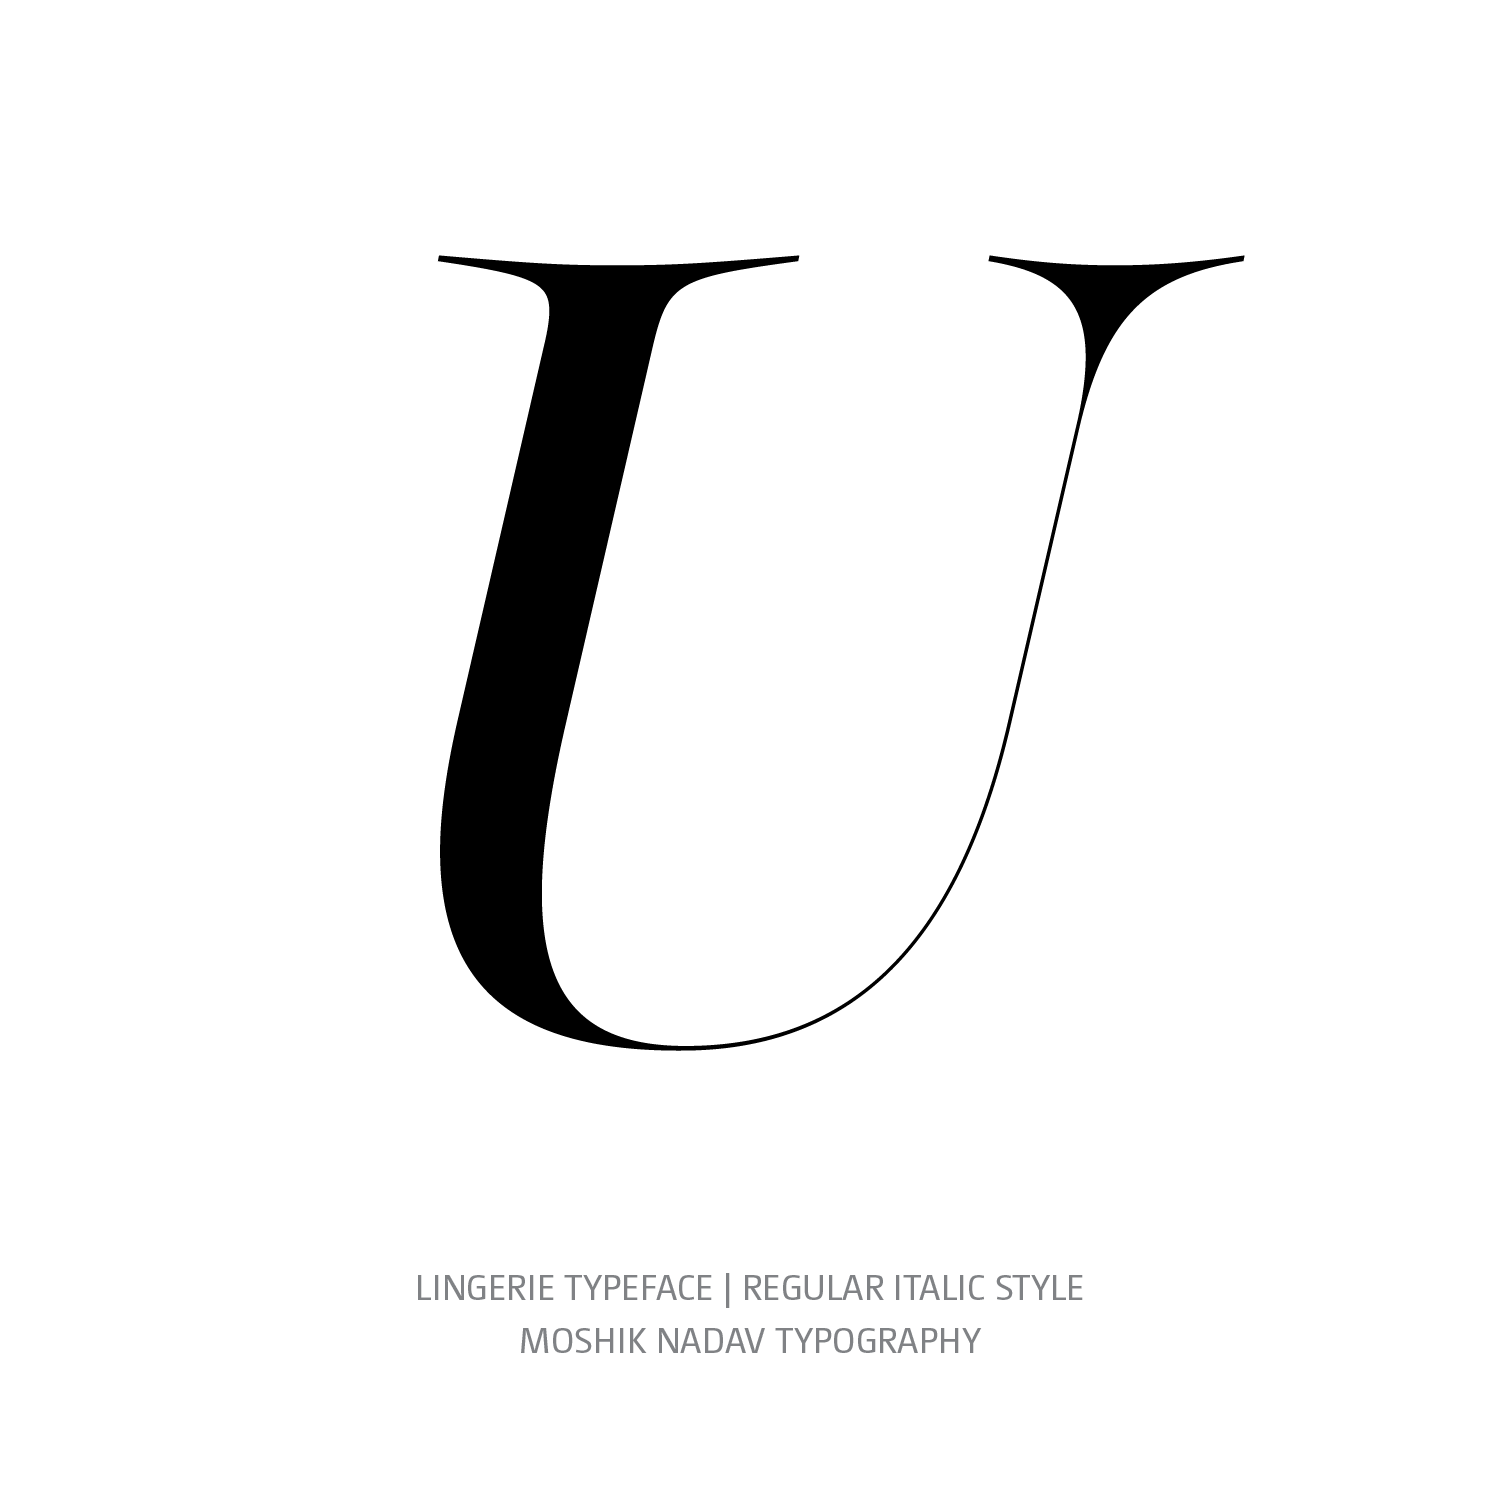 Lingerie Typeface Regular Italic U - Fashion fonts by Moshik Nadav Typography